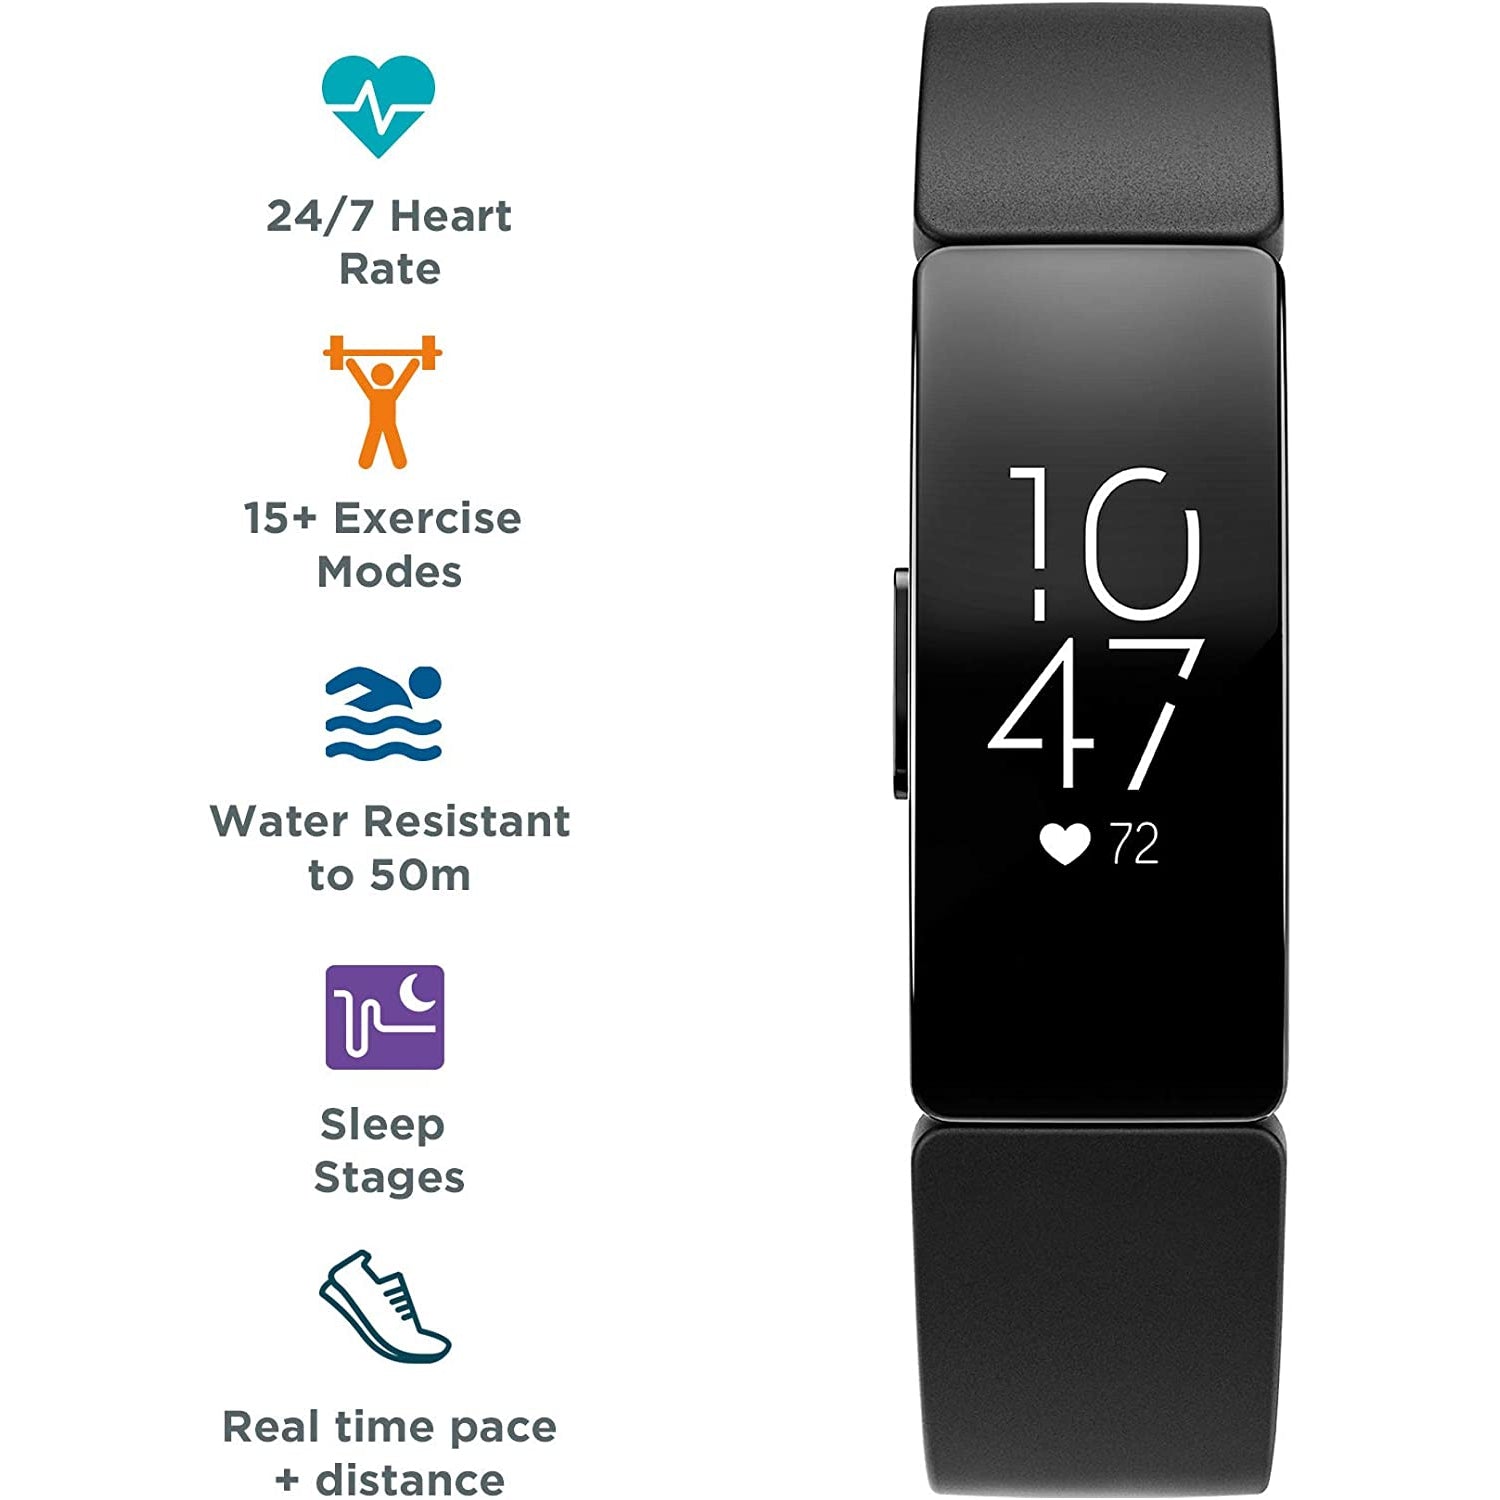 Fitbit Inspire HR Health & Fitness Tracker - Black - Refurbished Pristine